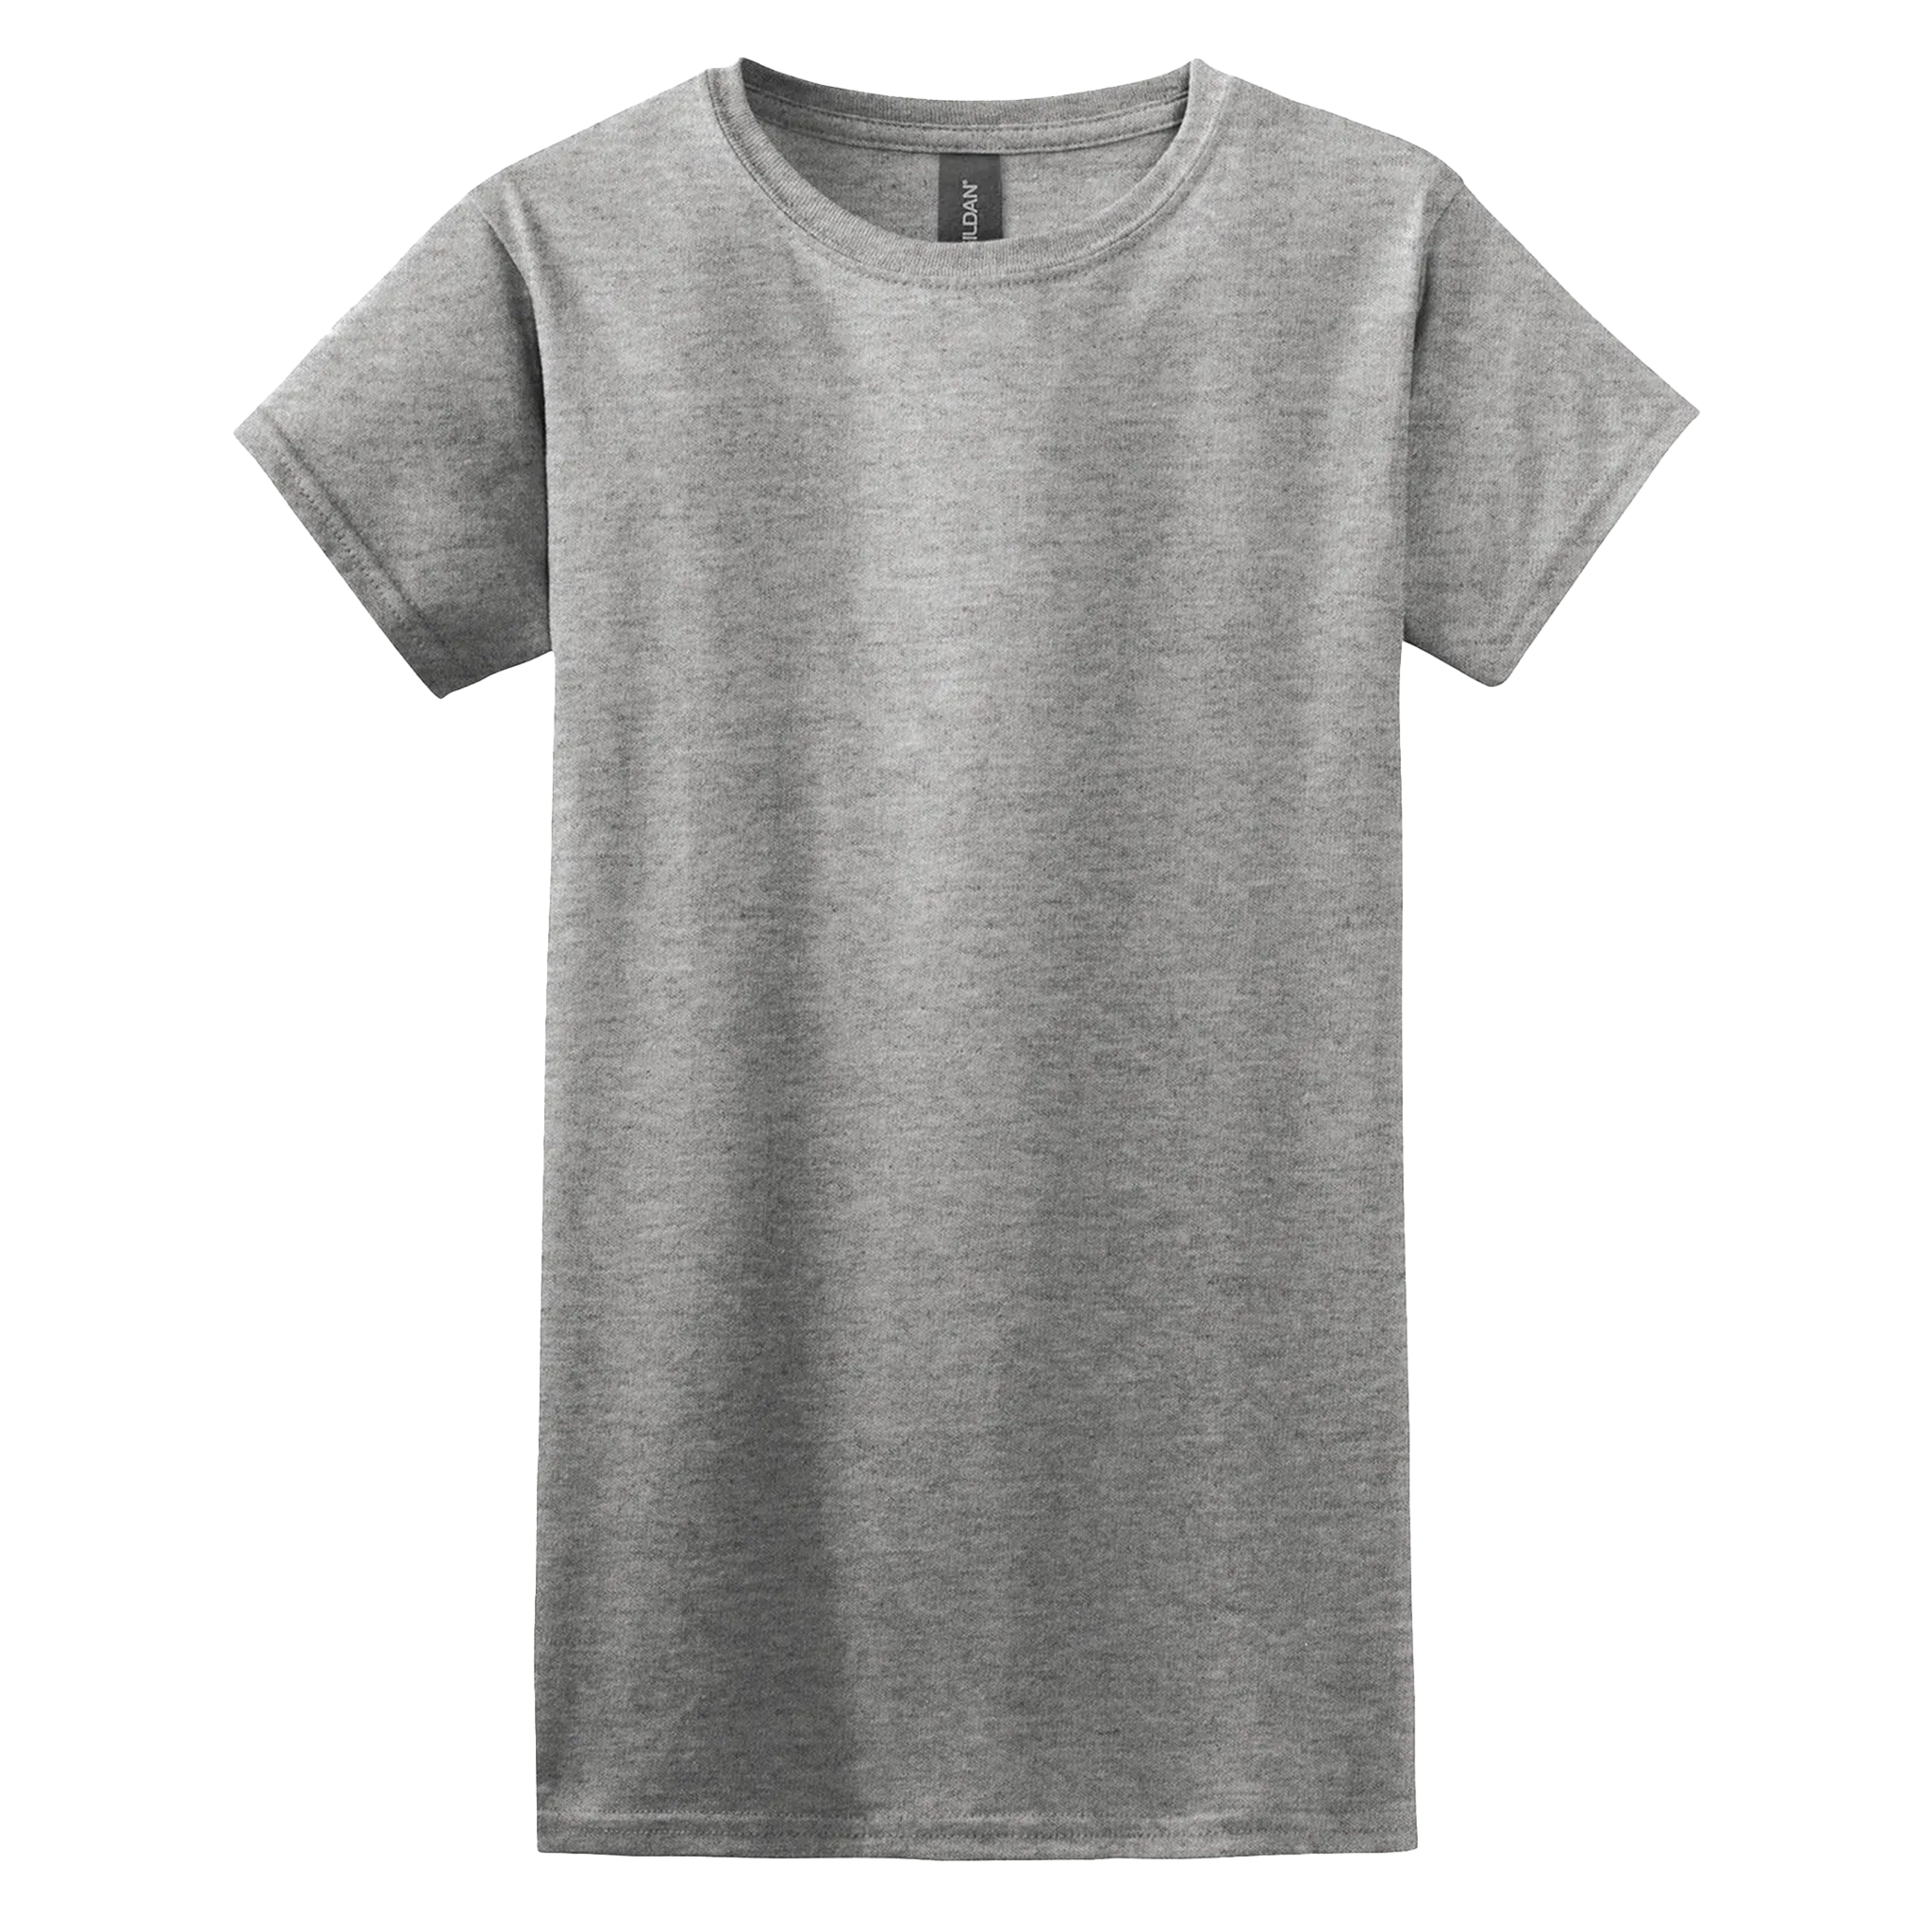 Gildan Softstyle T-Shirt - Women's Sizing S-3XL - Athletic Grey